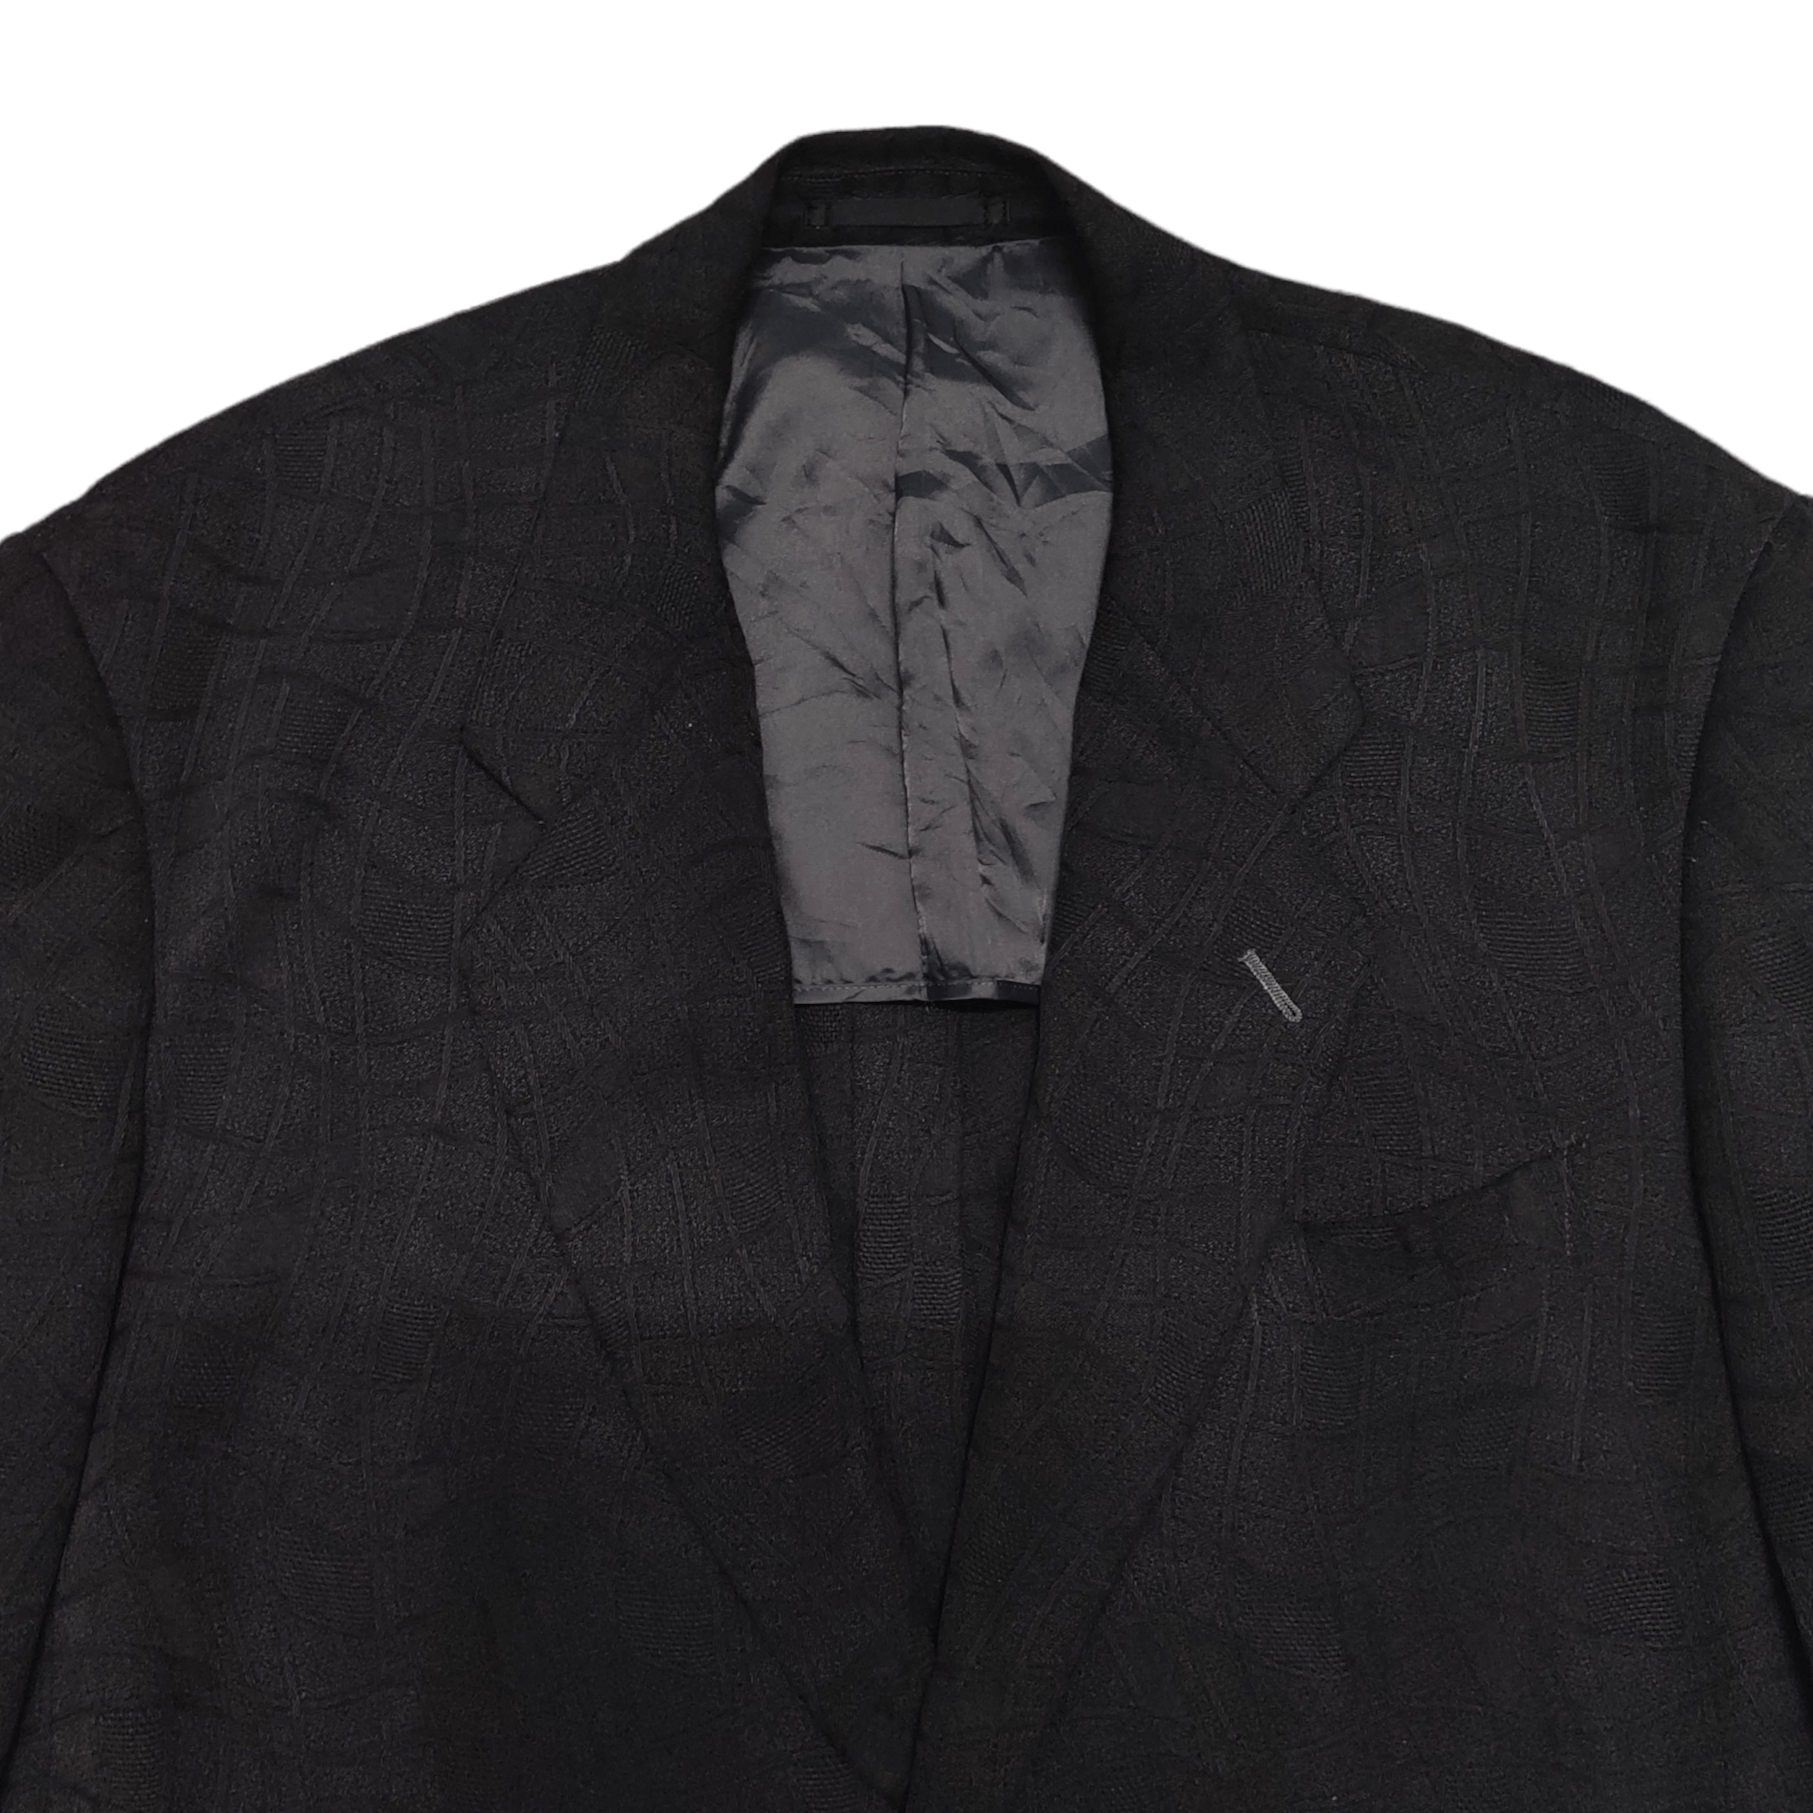 Rare Design Lanvin Paris Blazer Jacket Vintage - 2